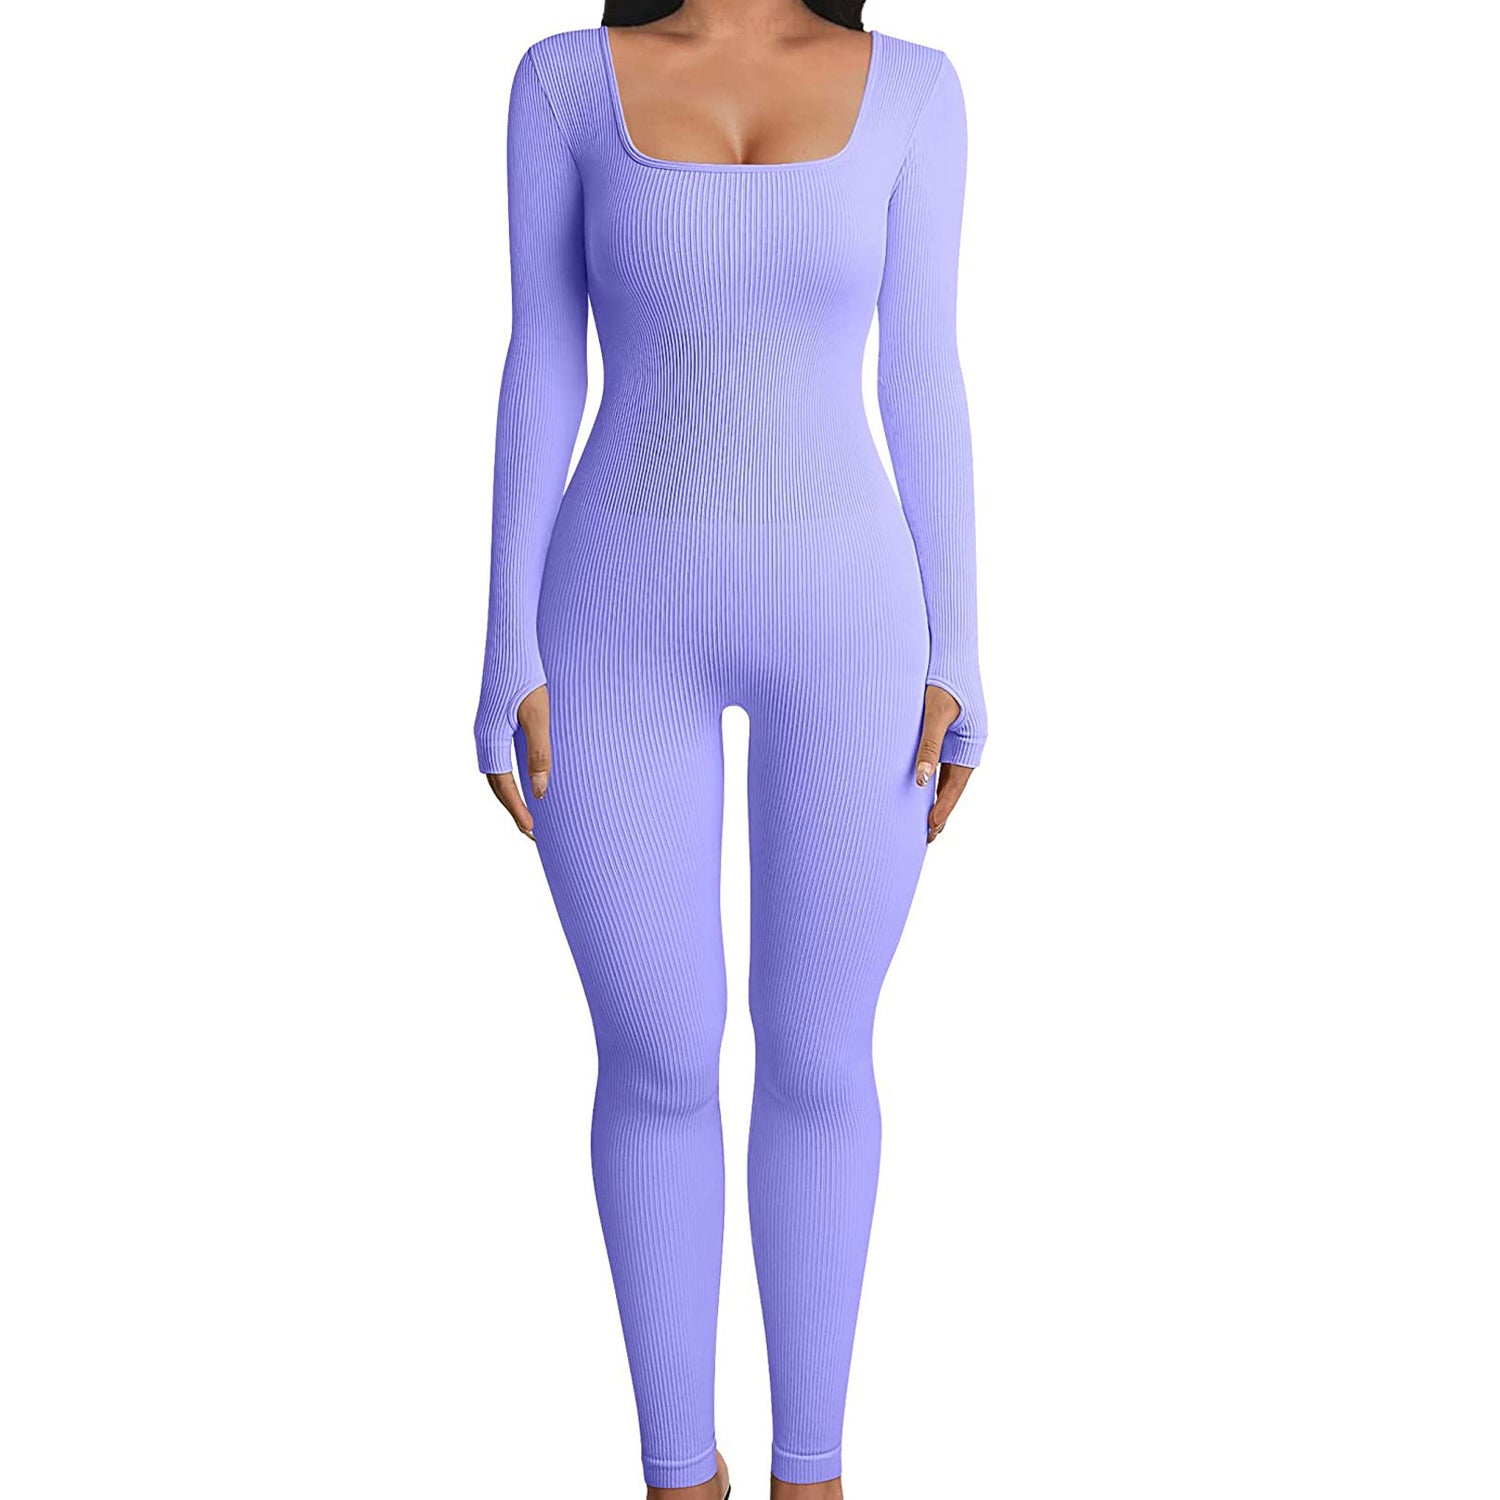 Jumpsuit  | Urban Chic: One-Piece Thread Bodysuit in Dazzling Colors – Sizes S to 3XL | 2XL |  Lavender Purple| thecurvestory.myshopify.com